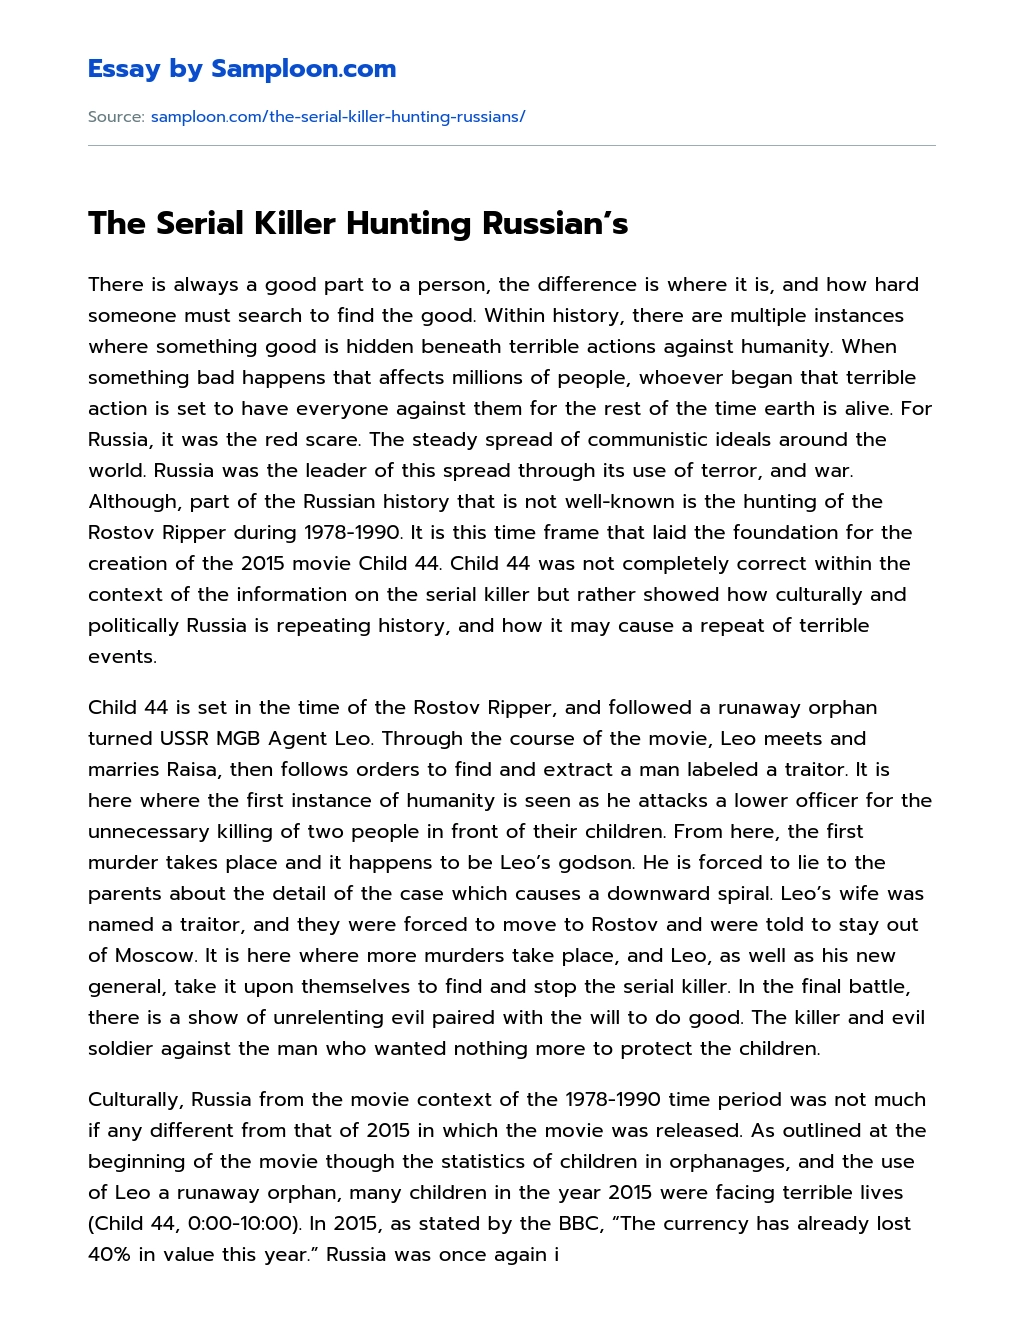 The Serial Killer Hunting Russian’s essay